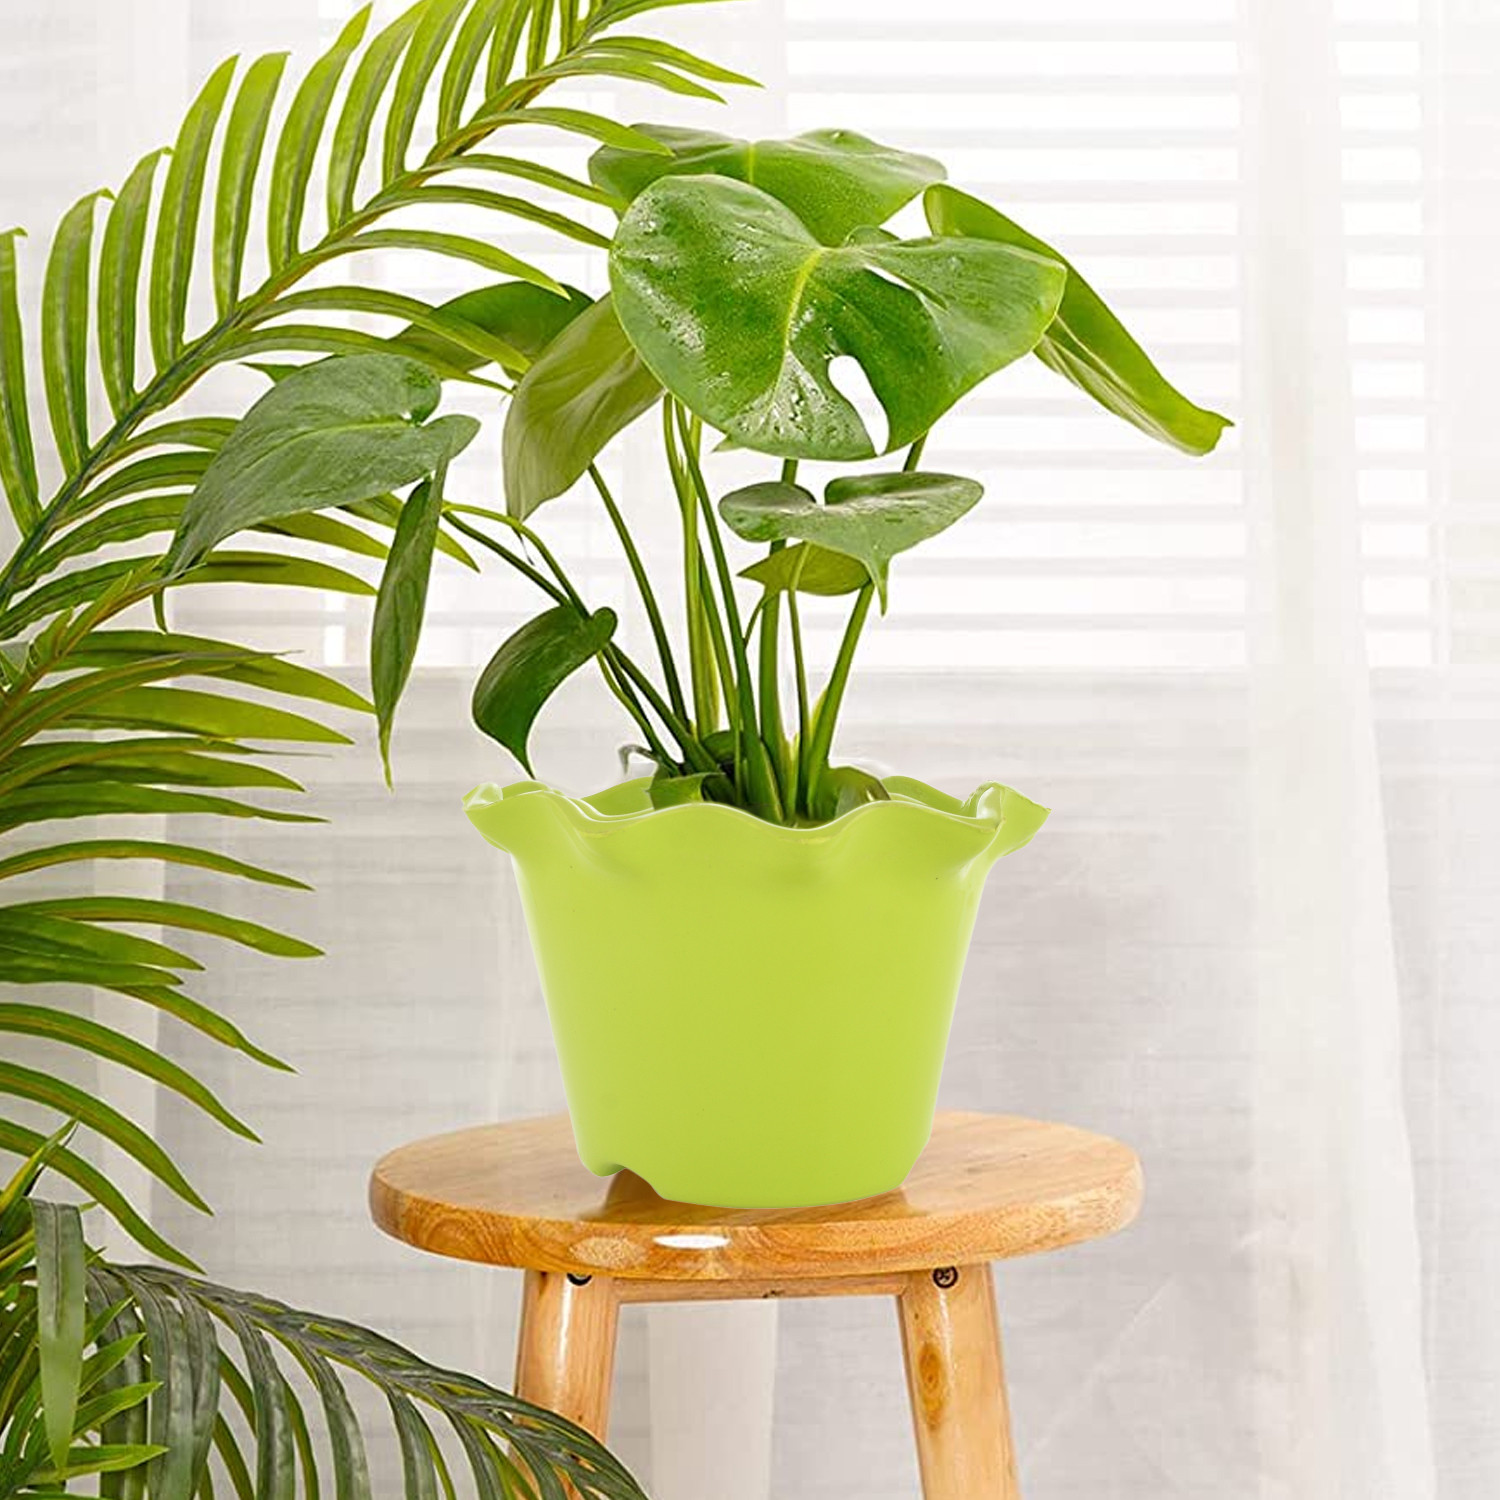 Kuber Industries Blossom Flower Pot|Durable Plastic Flower Pots|Planters for Home Décor|Garden|Living Room|Balcony (Green)